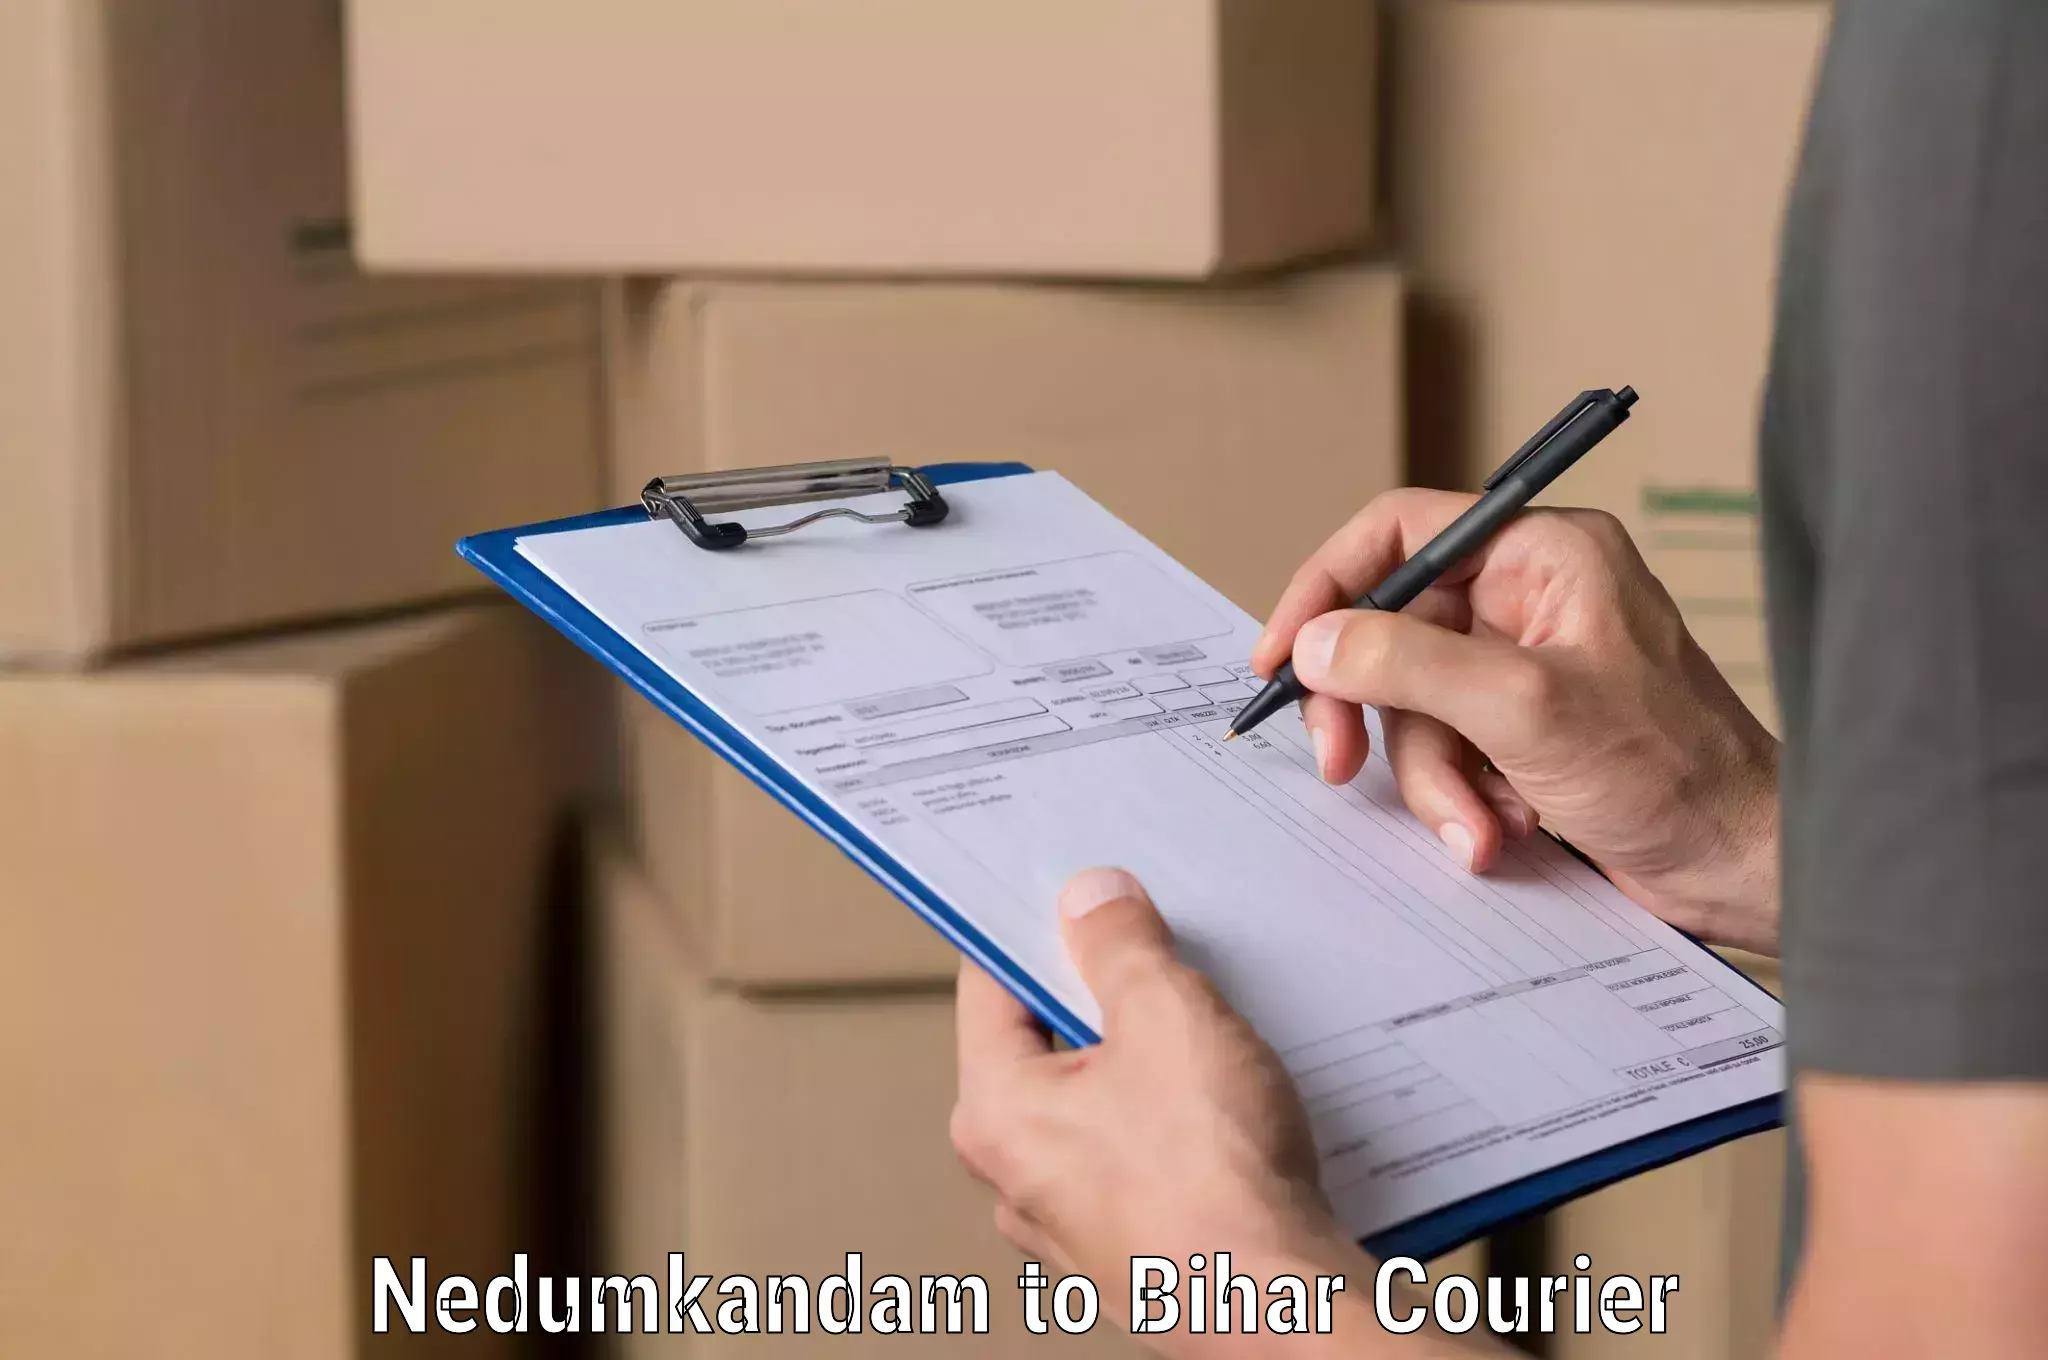 Digital courier platforms Nedumkandam to Kudra